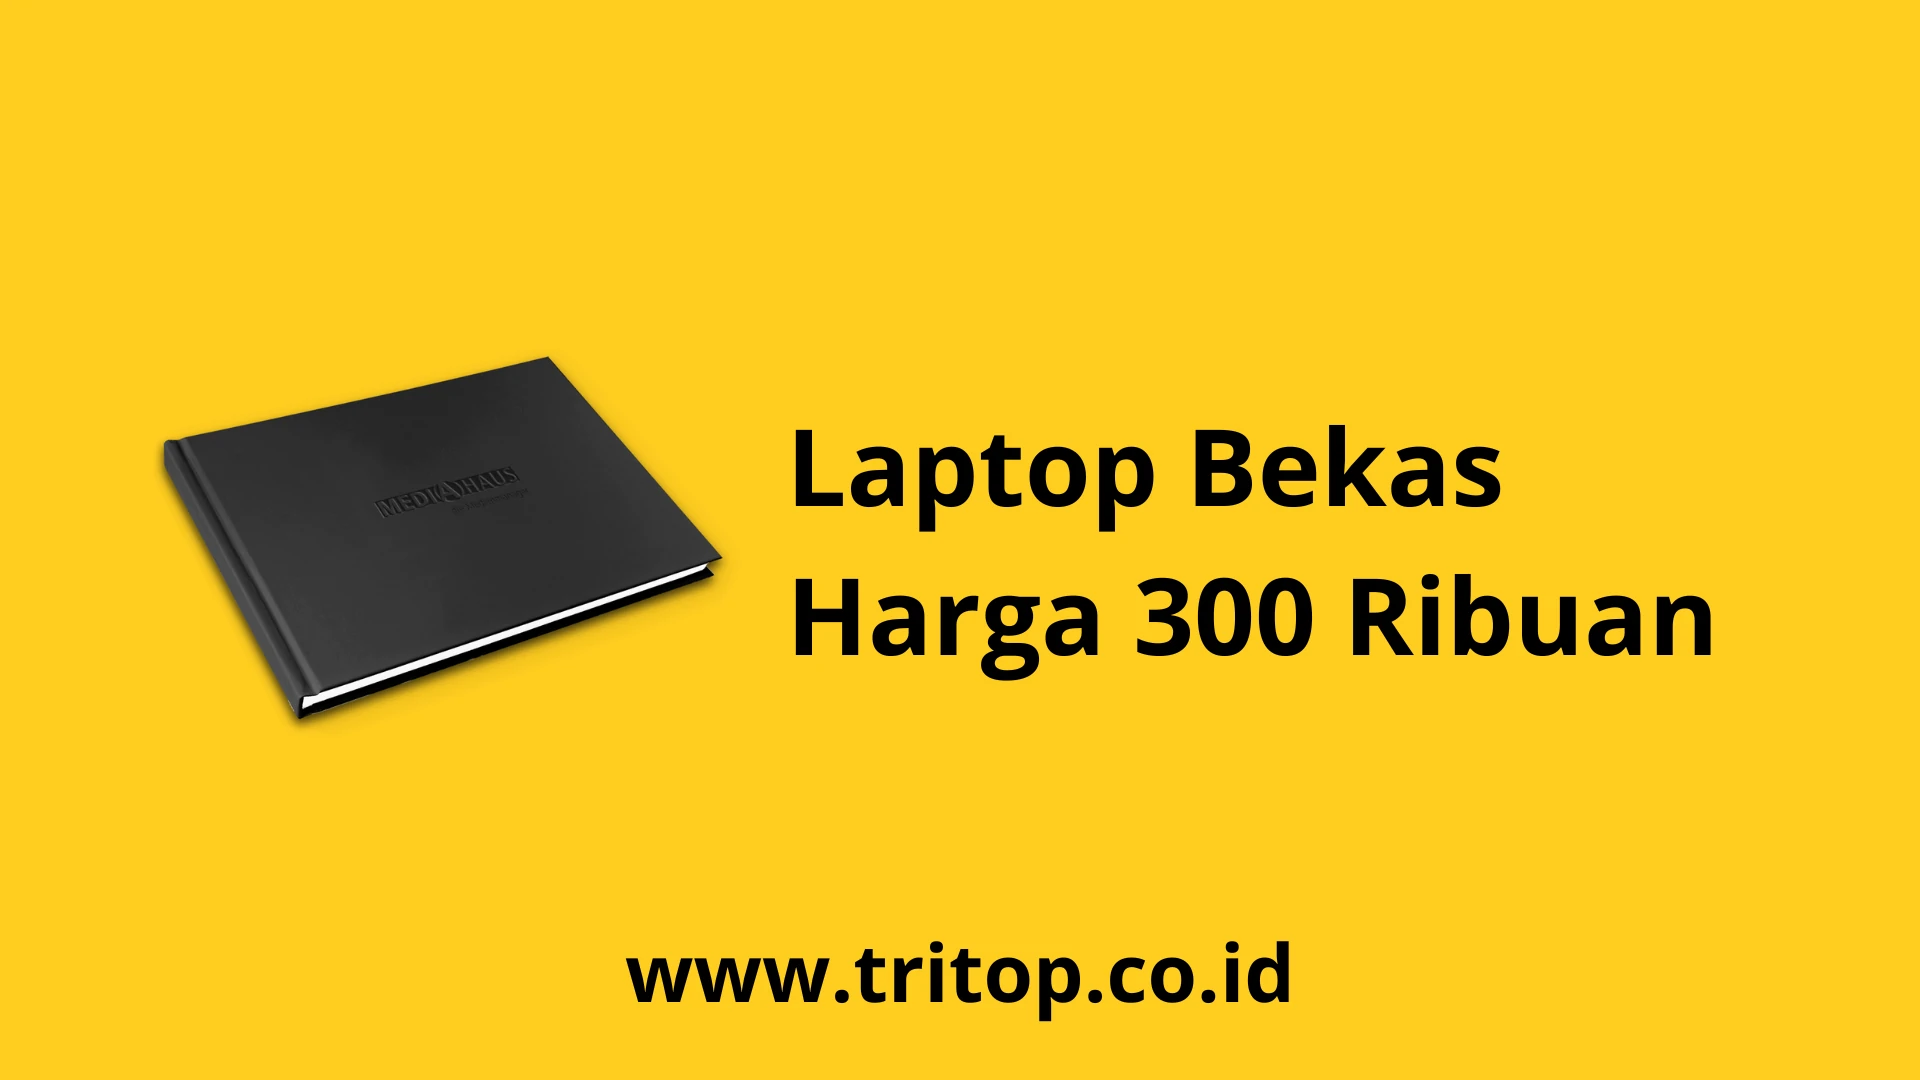 Laptop Bekas 300 Ribuan Tritop.co.id